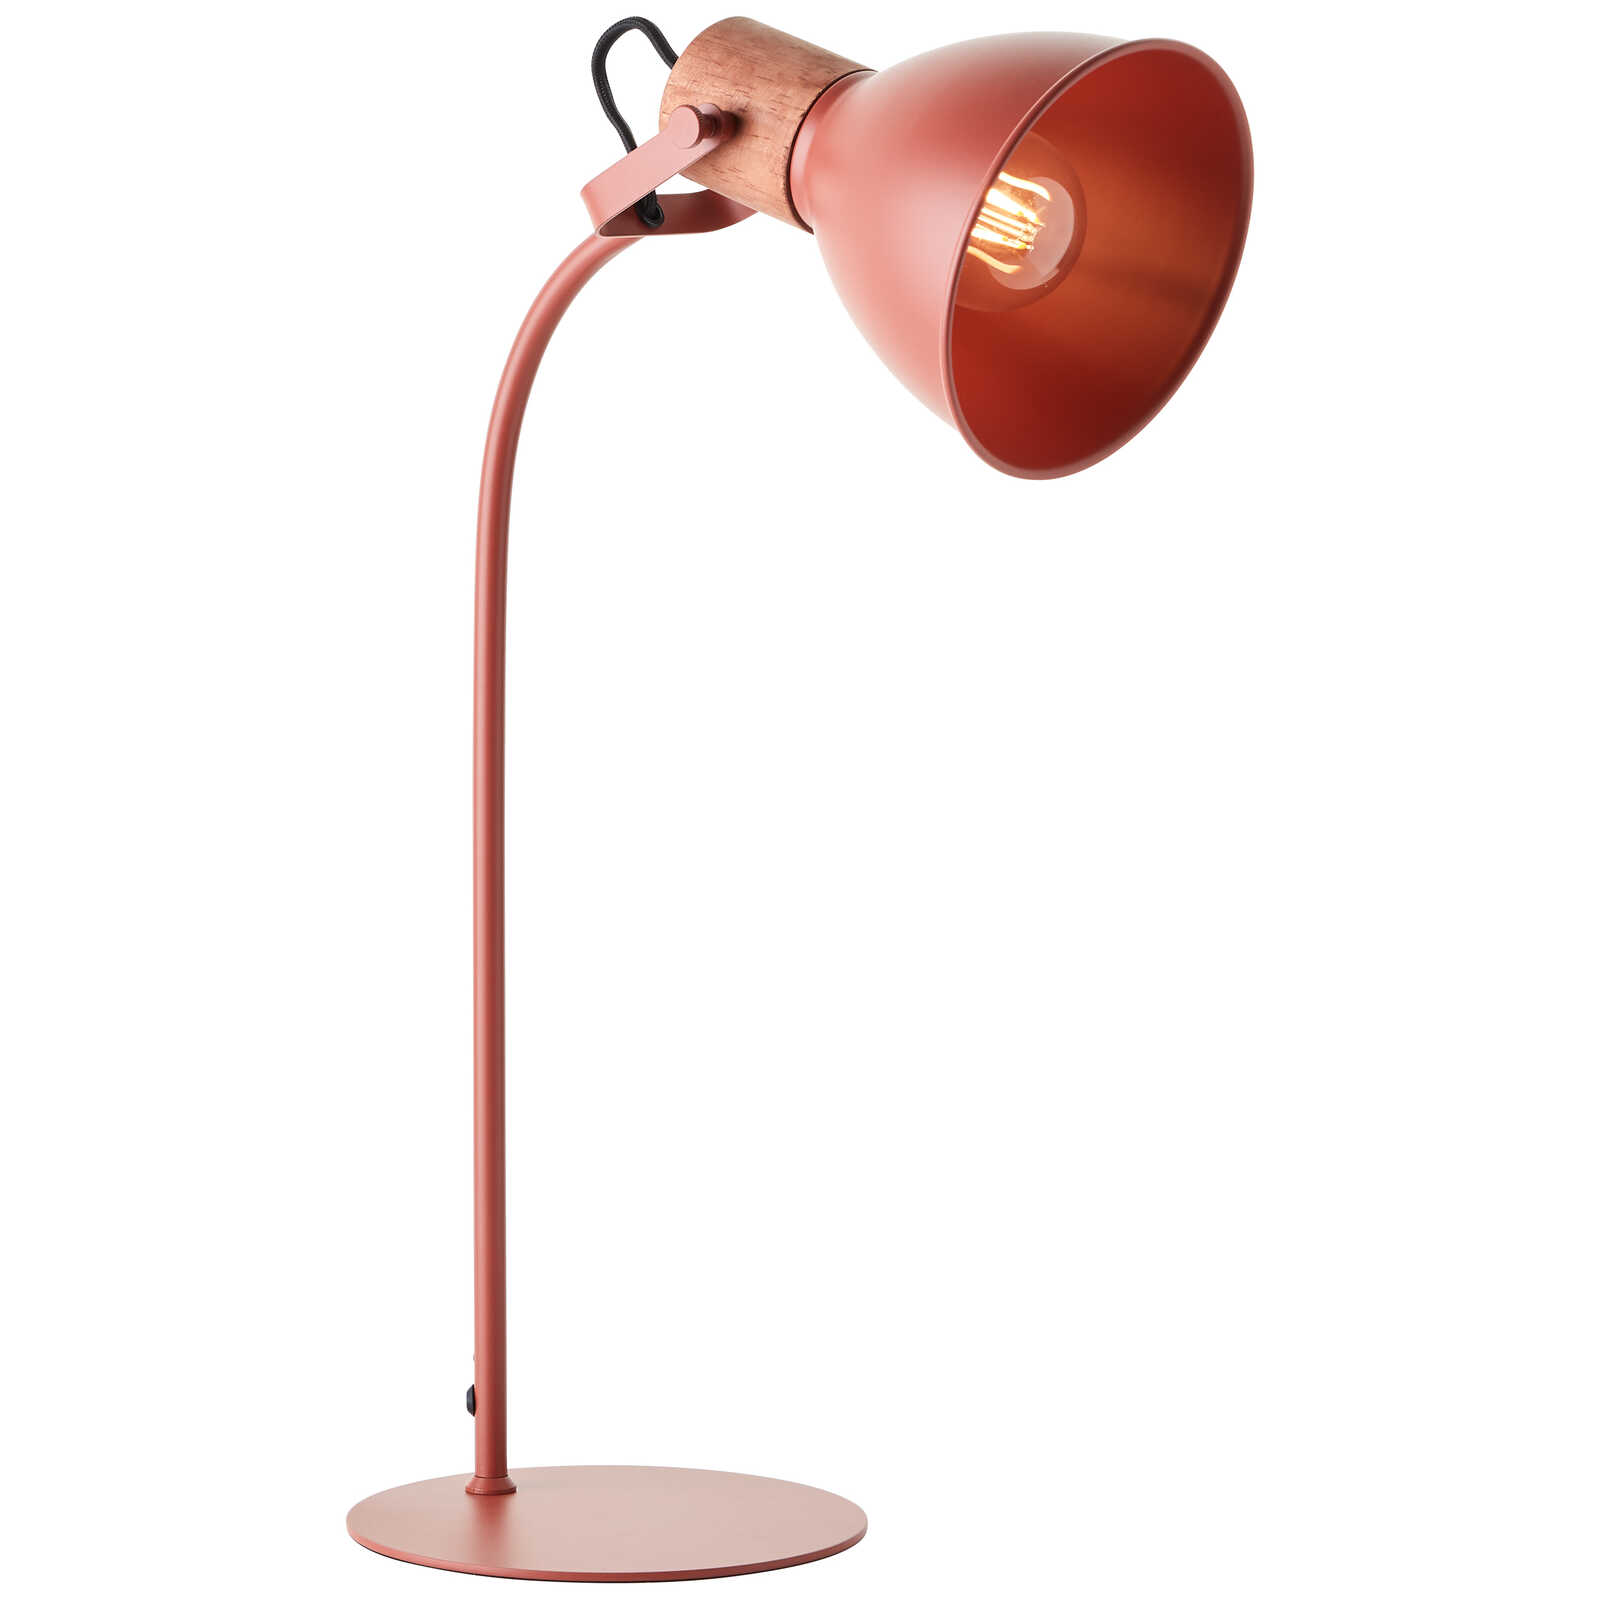             Houten tafellamp - Franziska 2 - Rood
        